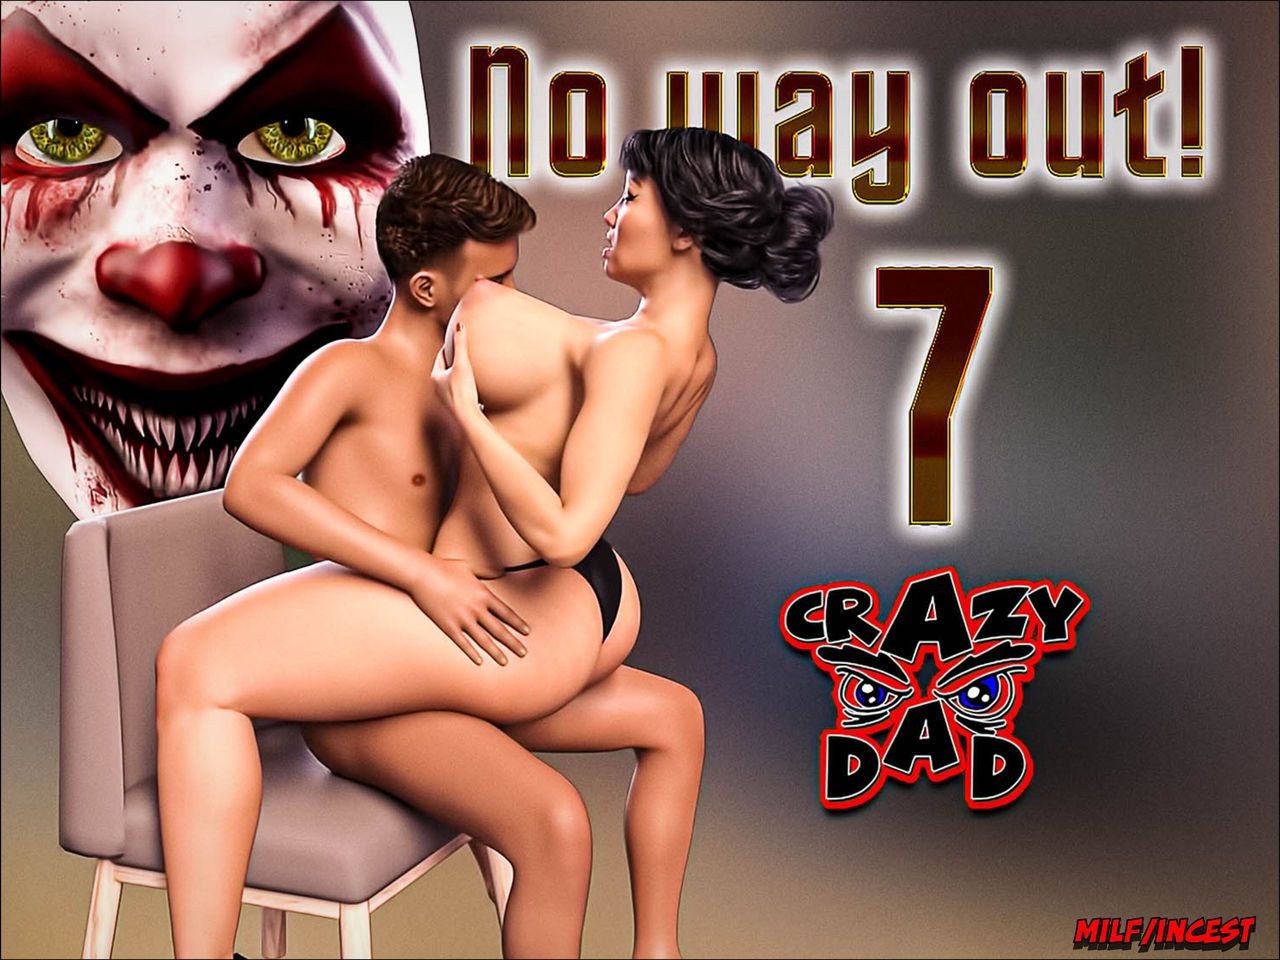 Guy (Crazy Dad 3D) No Way Out! 7 (English) Smoking